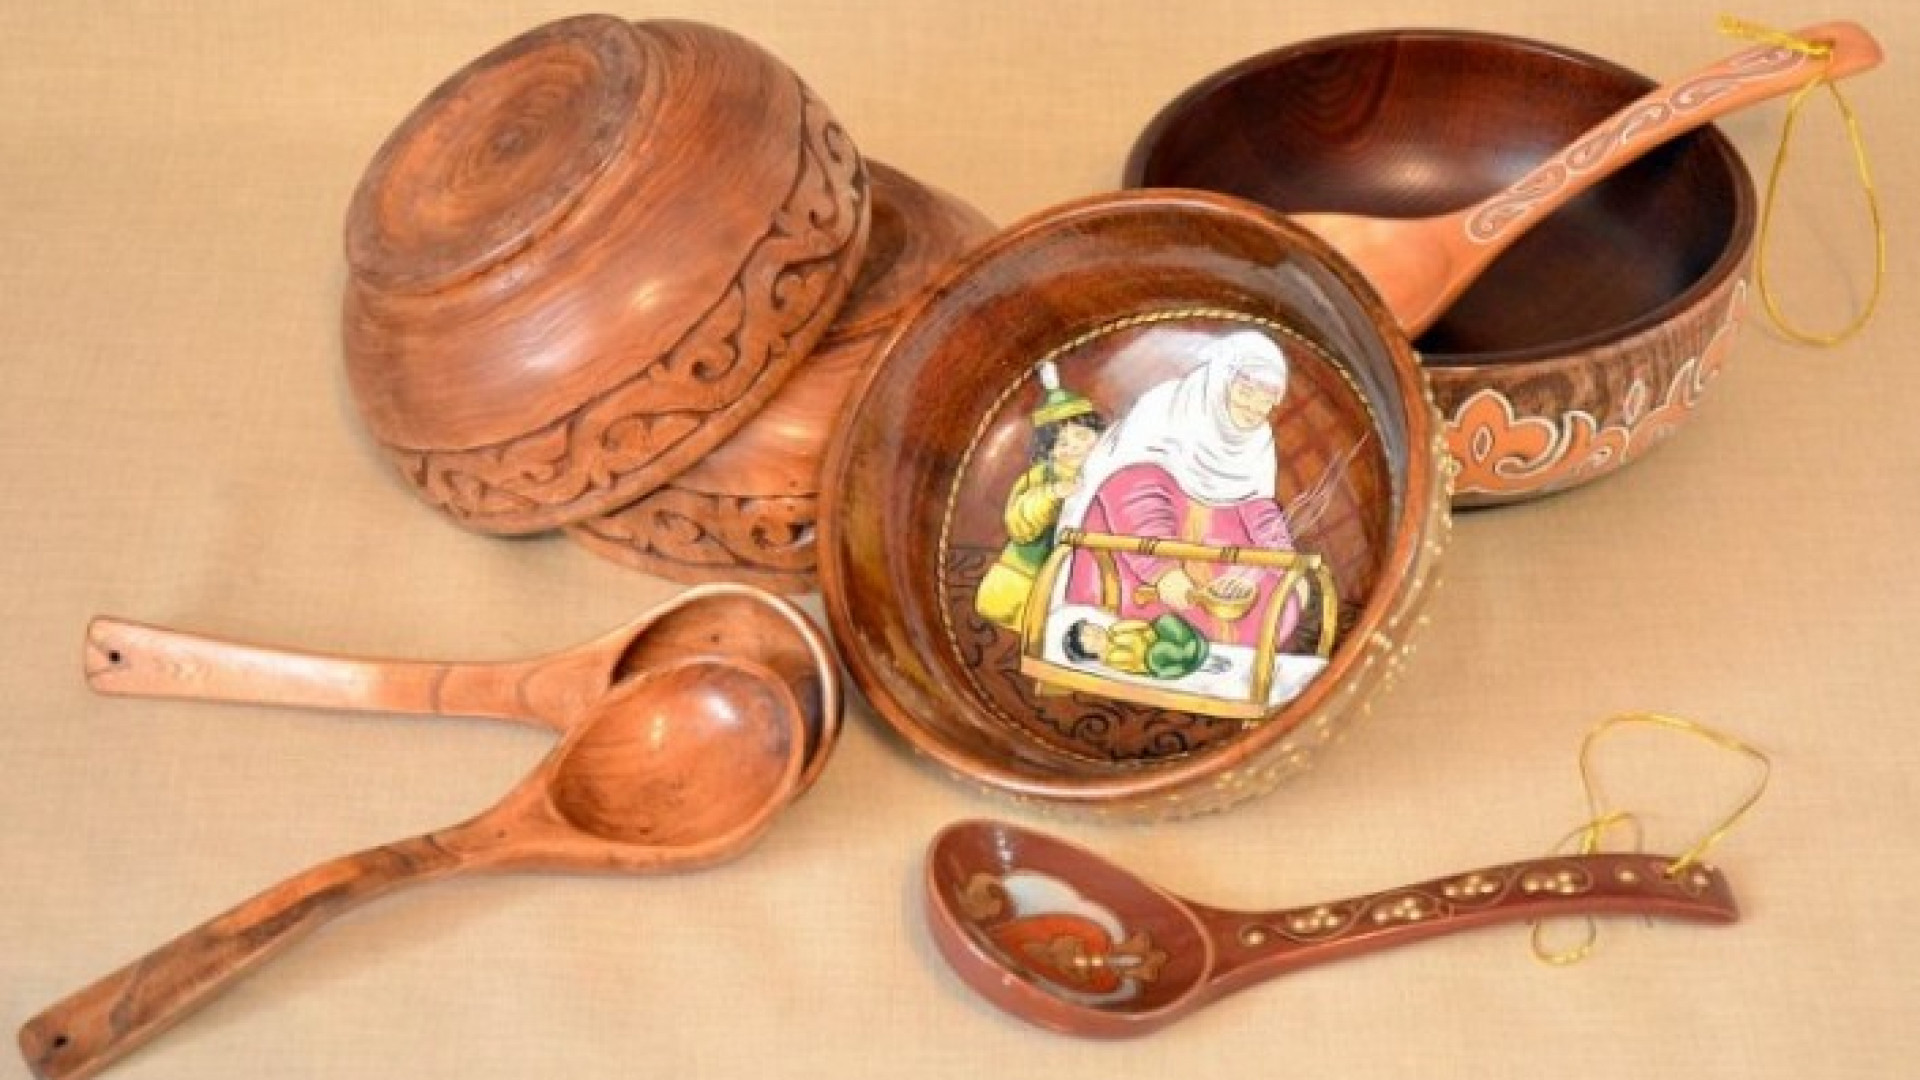 Казахская национальная посуда. Казахская посуда. Деревянная посуда казахов. Деревянная ложка.